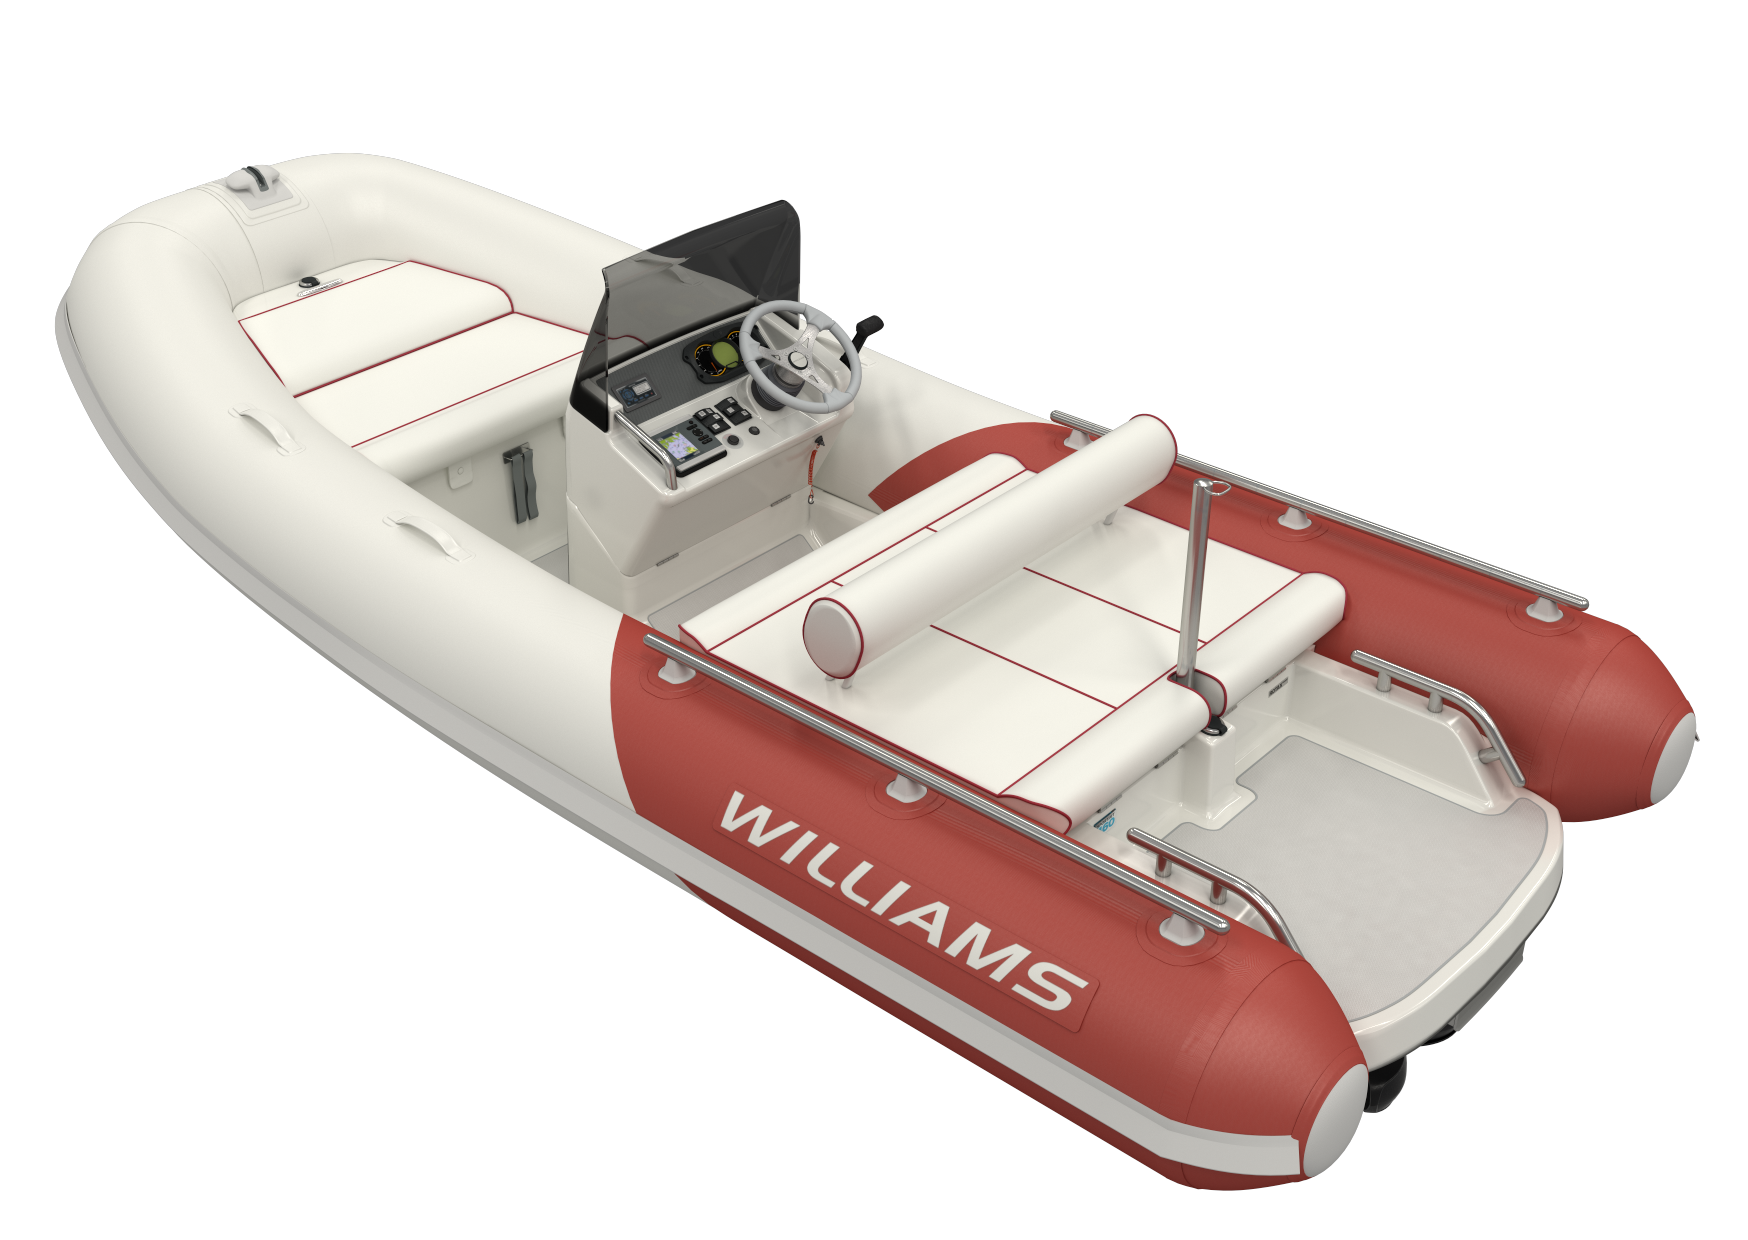 williams yacht tender